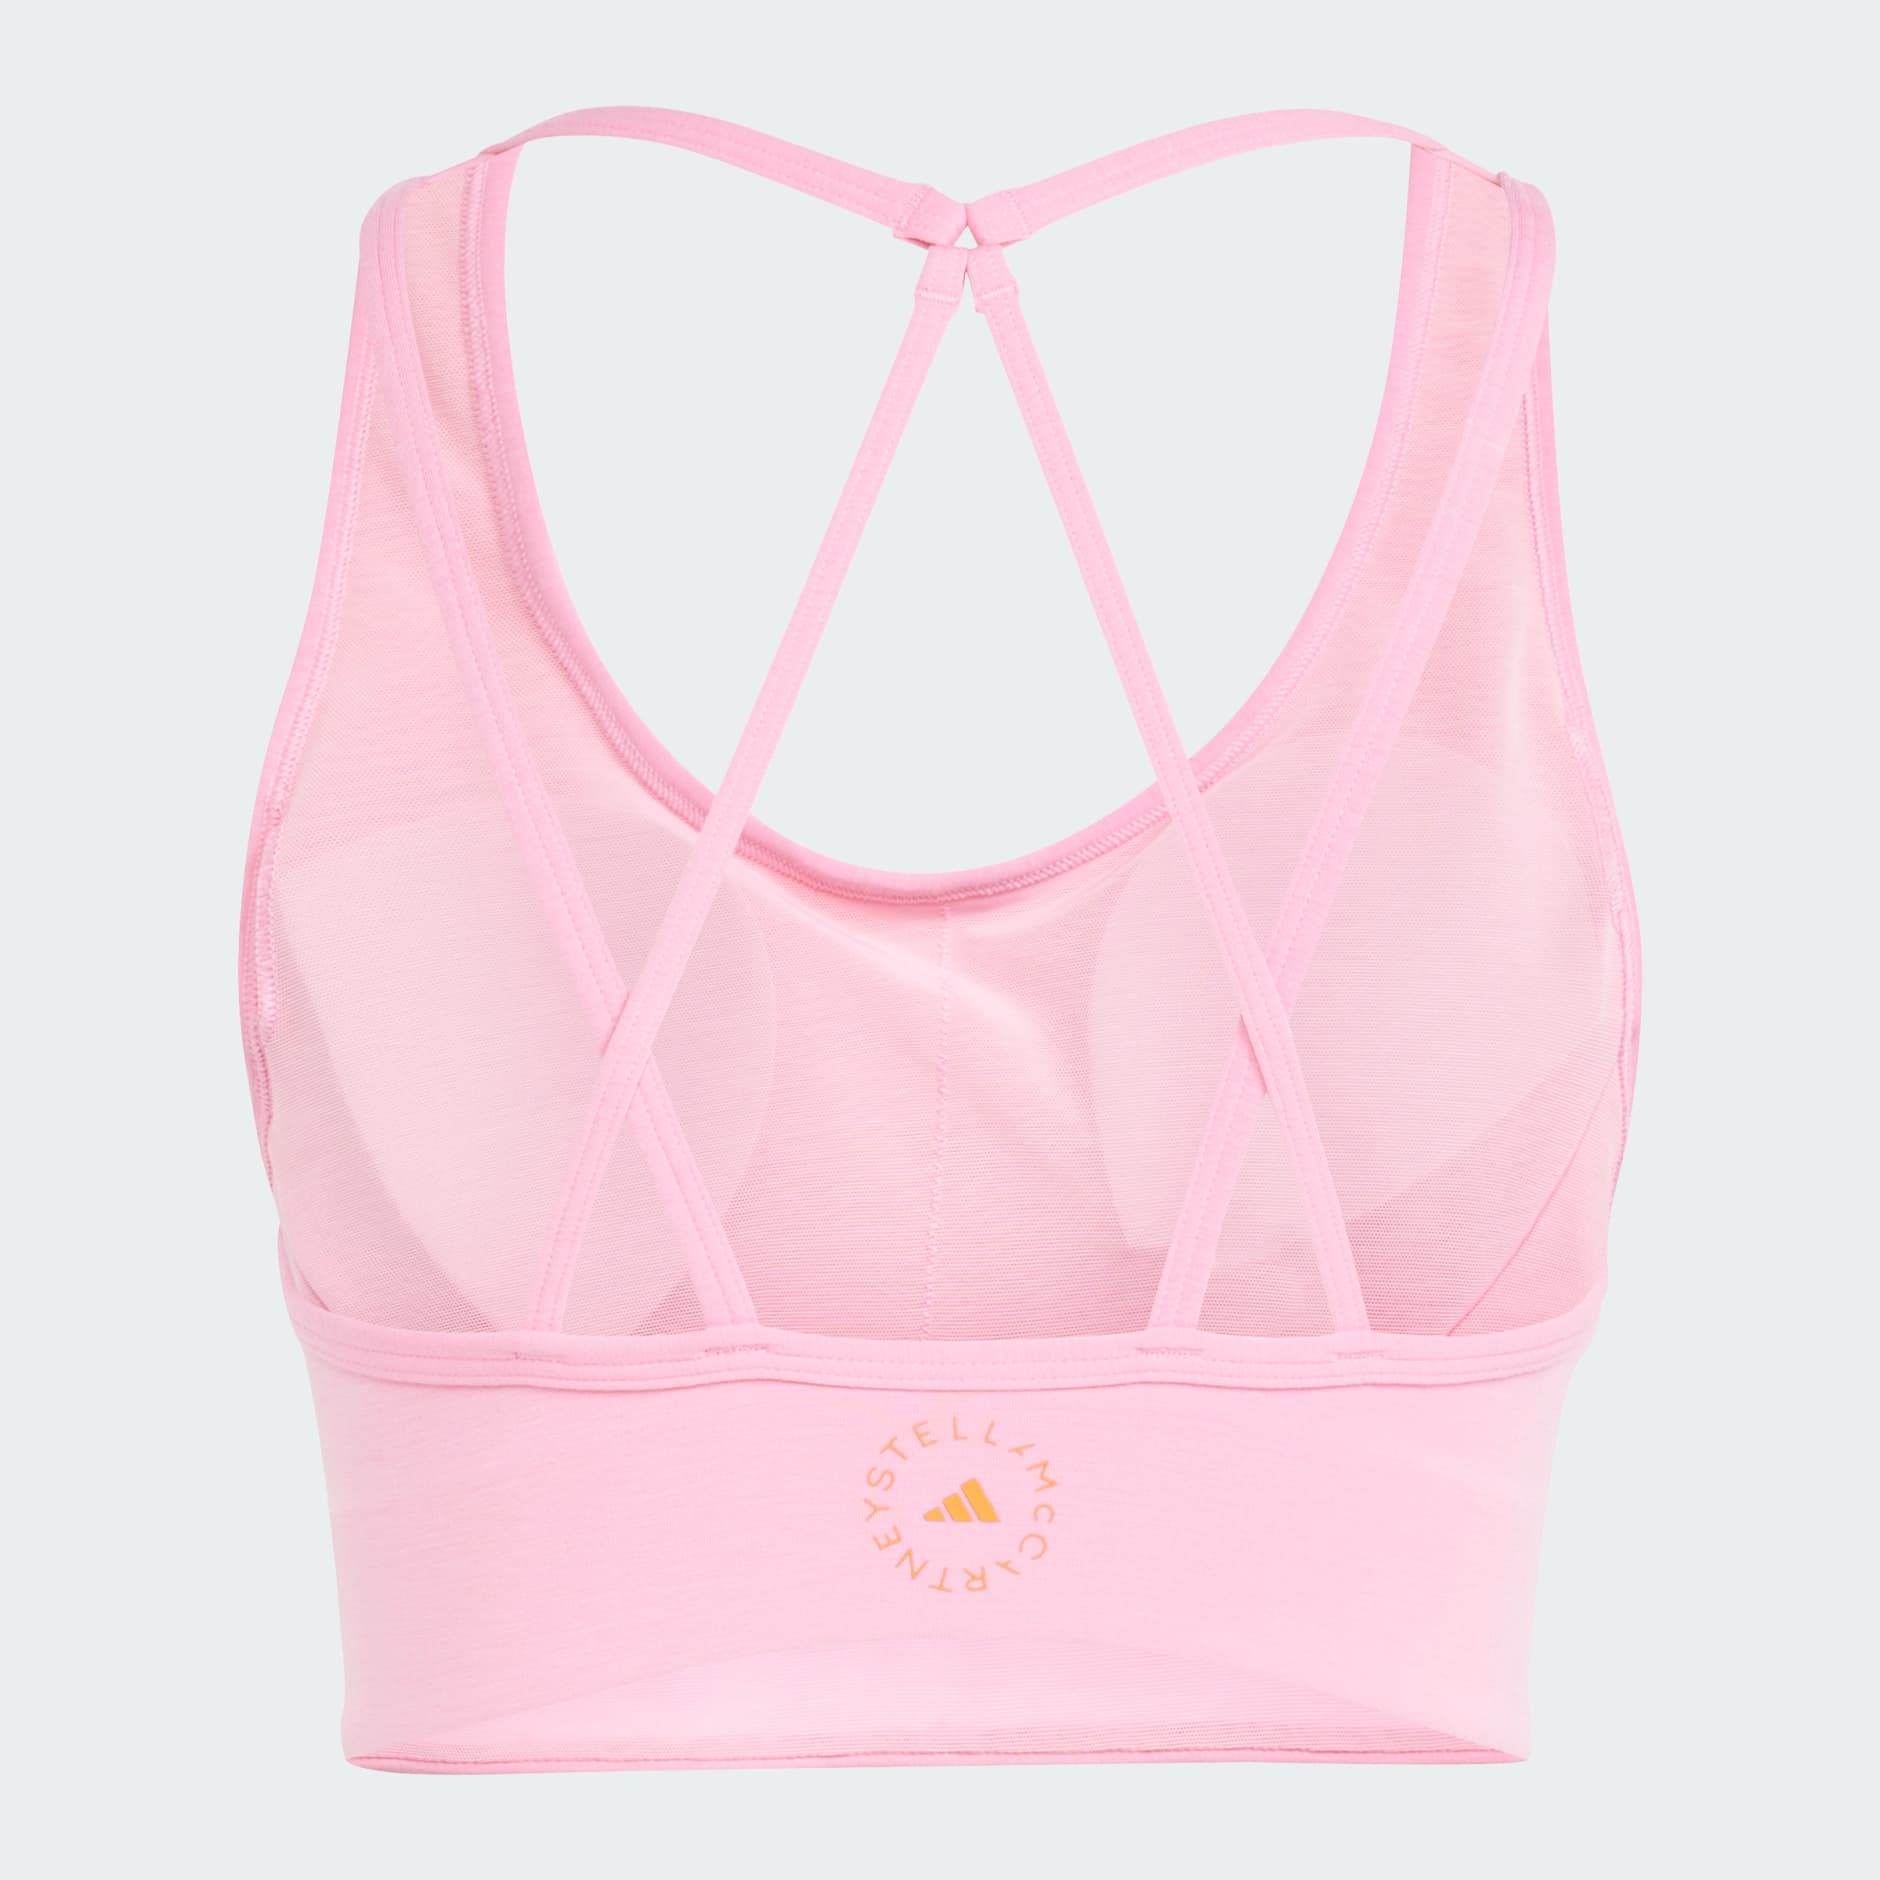 TrueStrength High Support sports bra in pink - Adidas By Stella Mc